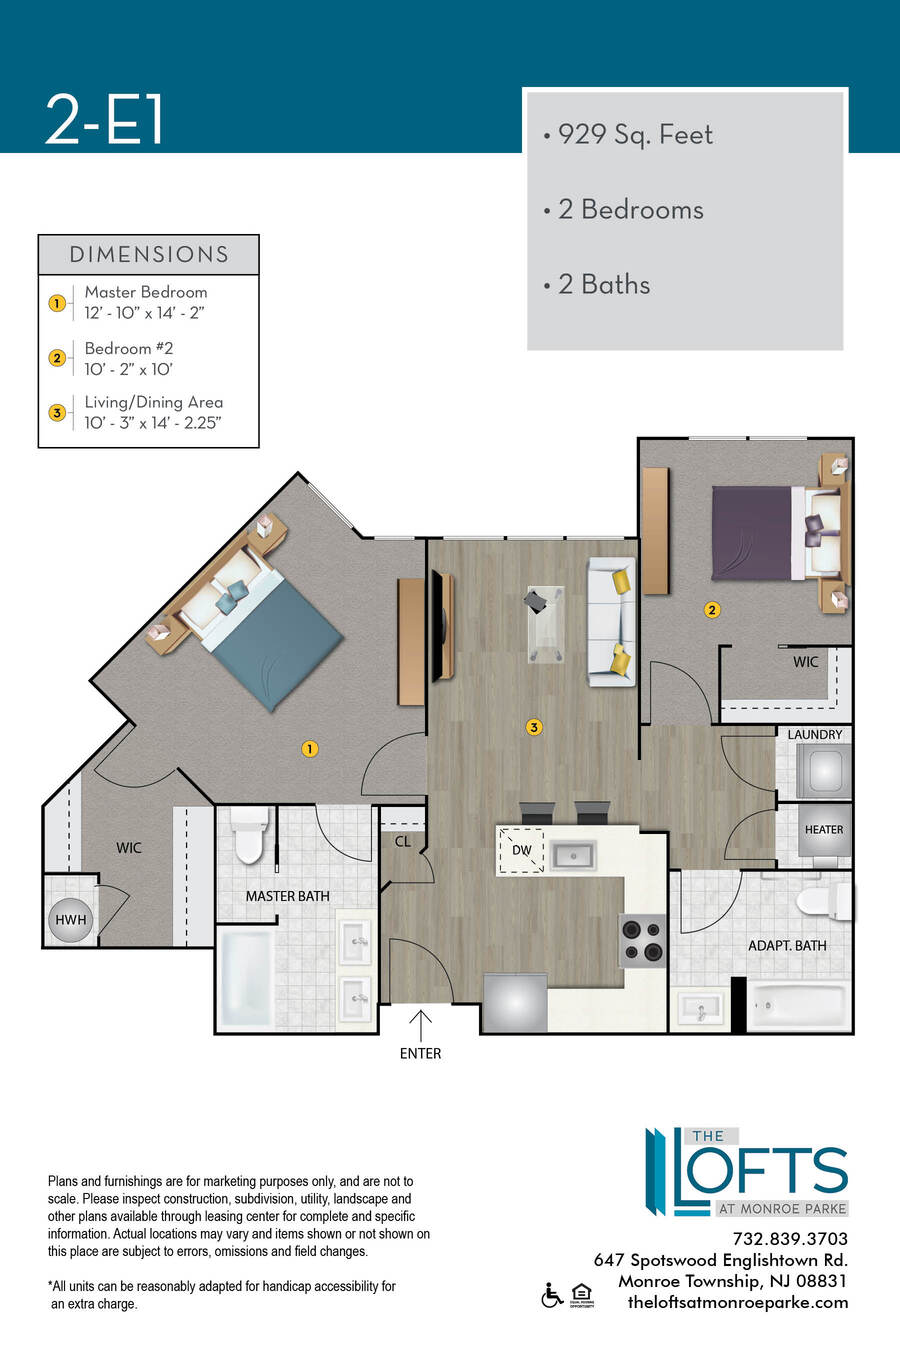 The Lofts at Monroe Park Apartment Floor Plan 2E1